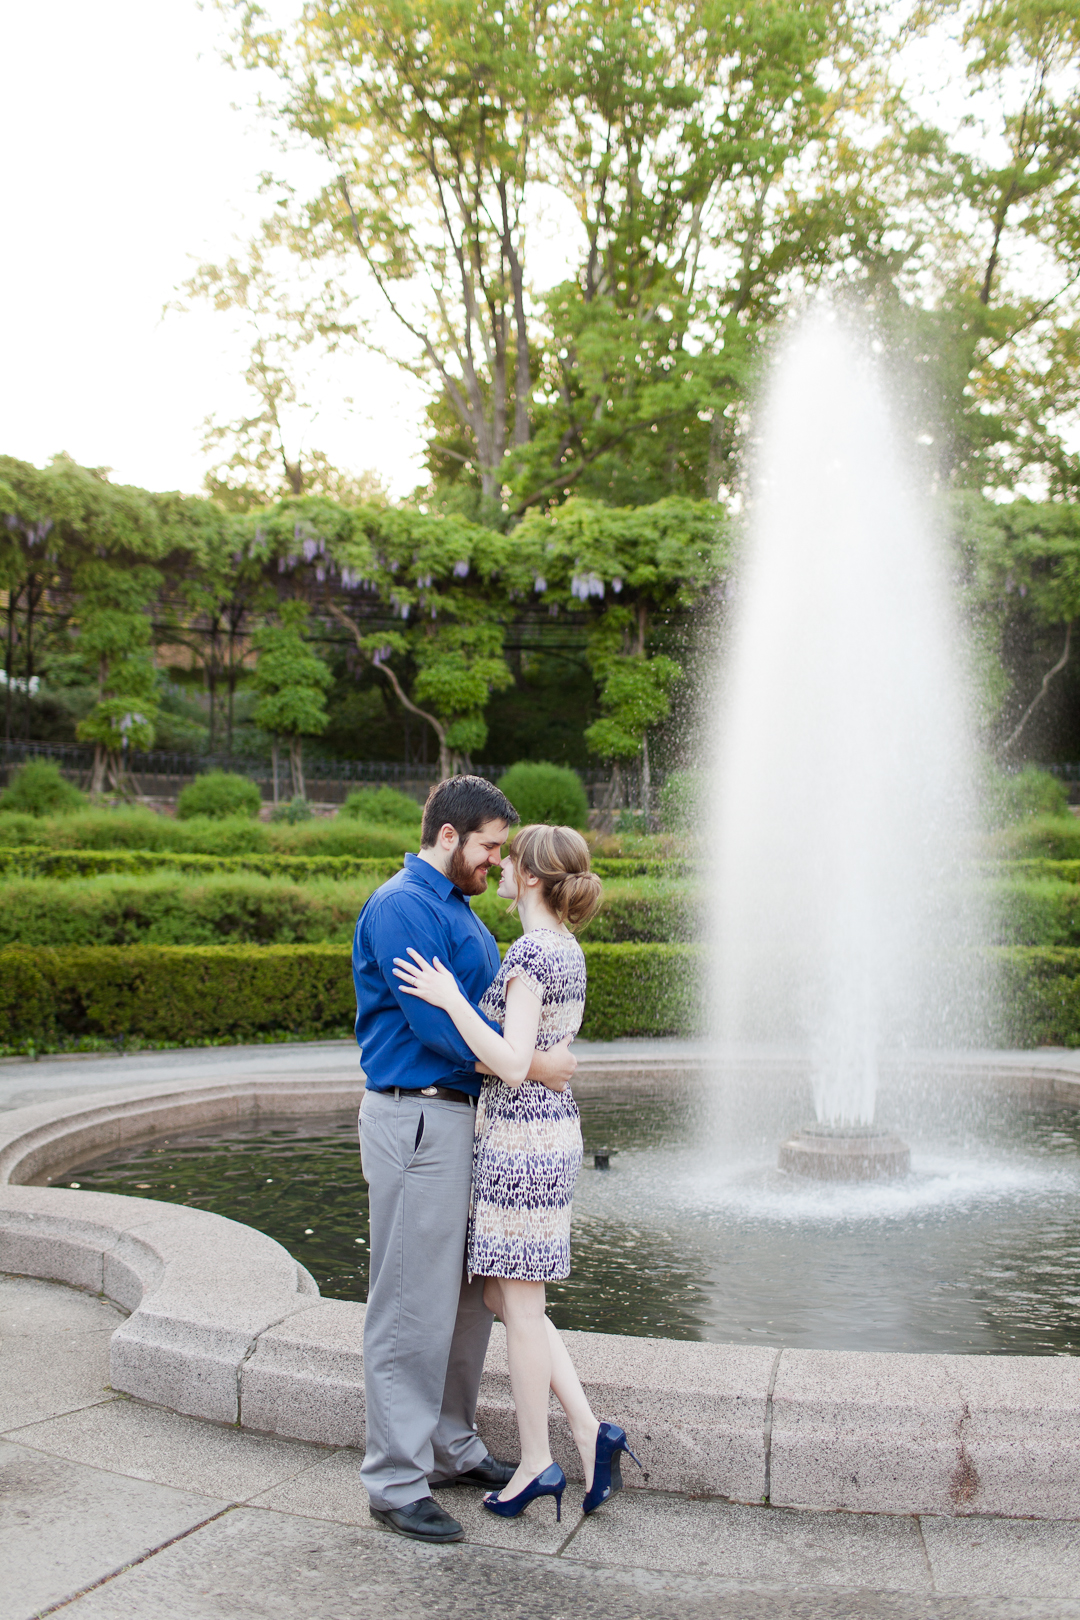 Melissa Kruse Photography - Danielle & Douglas Central Park Conservatory Garden Engagement Photos-108.jpg